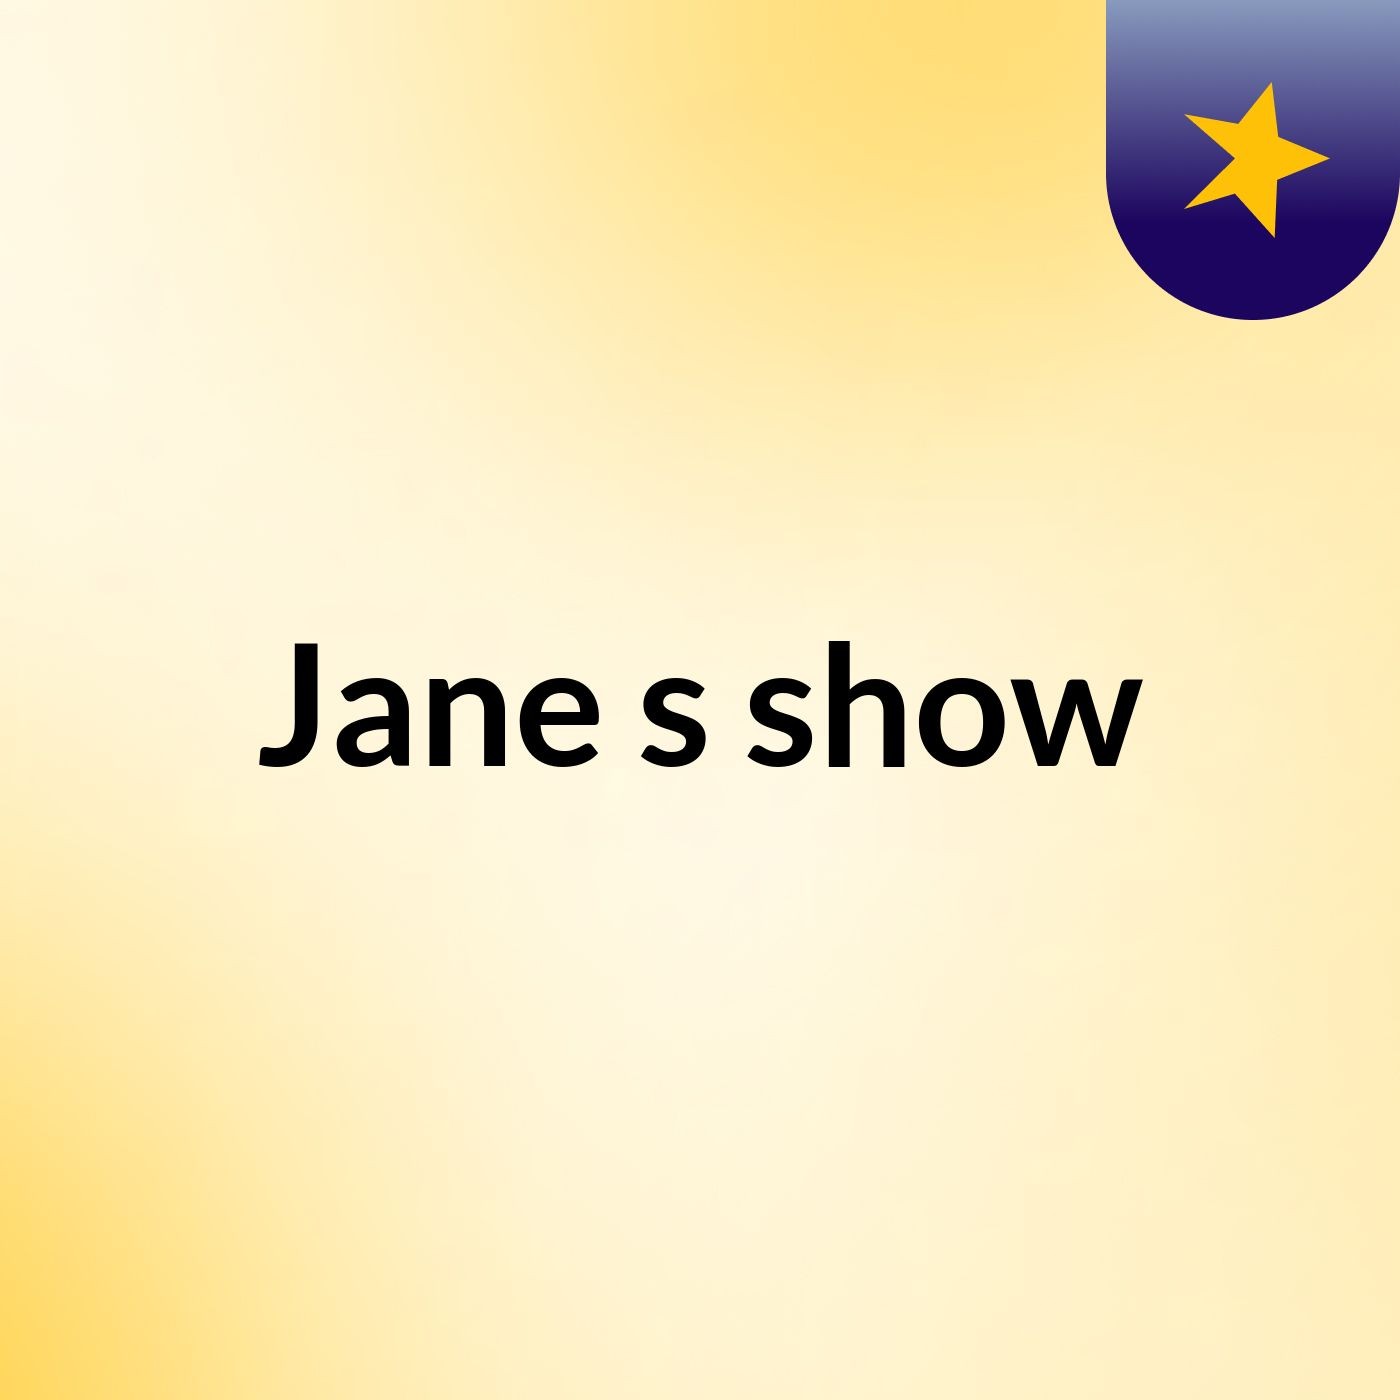 Jane's show